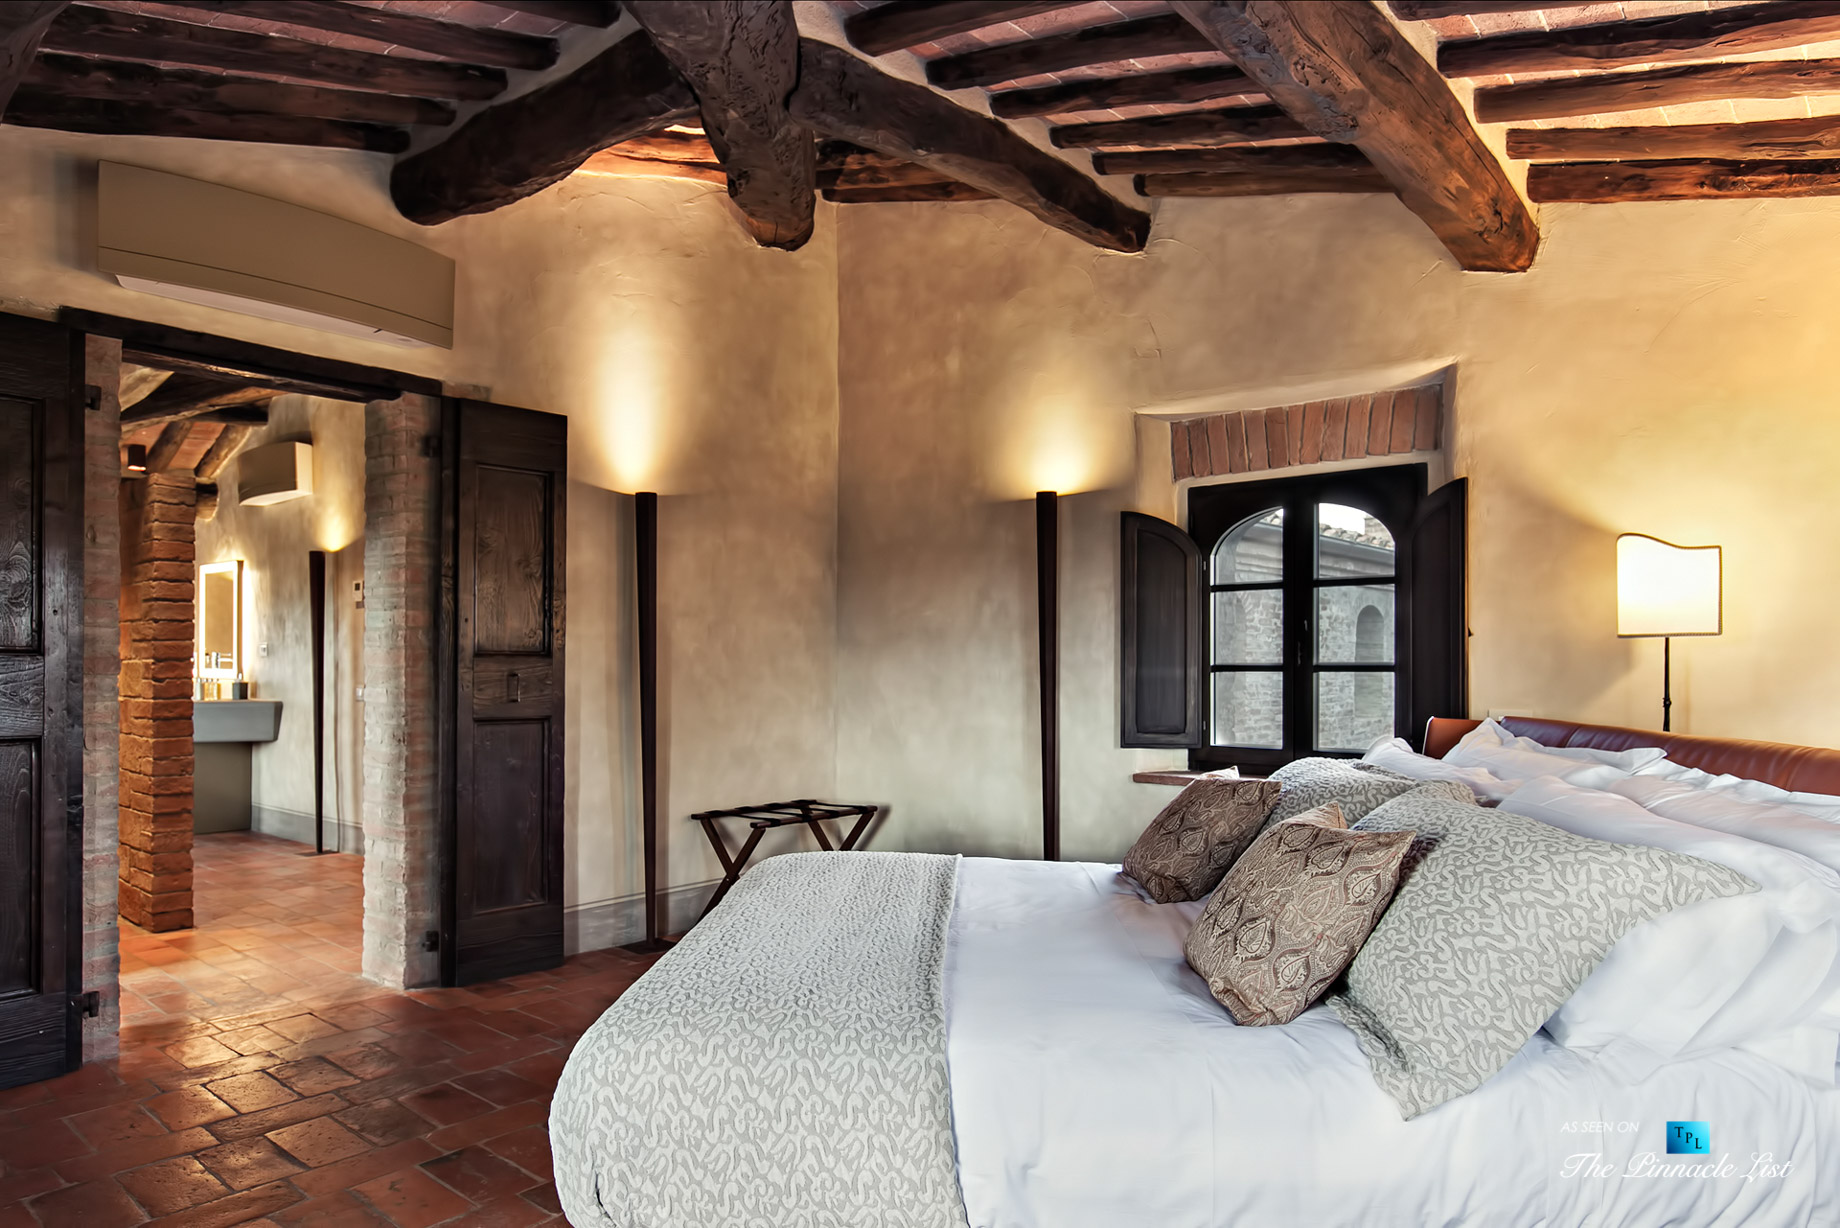 Podere Paníco Estate - Monteroni d'Arbia, Tuscany, Italy - Bedroom - Luxury Real Estate - Tuscan Villa